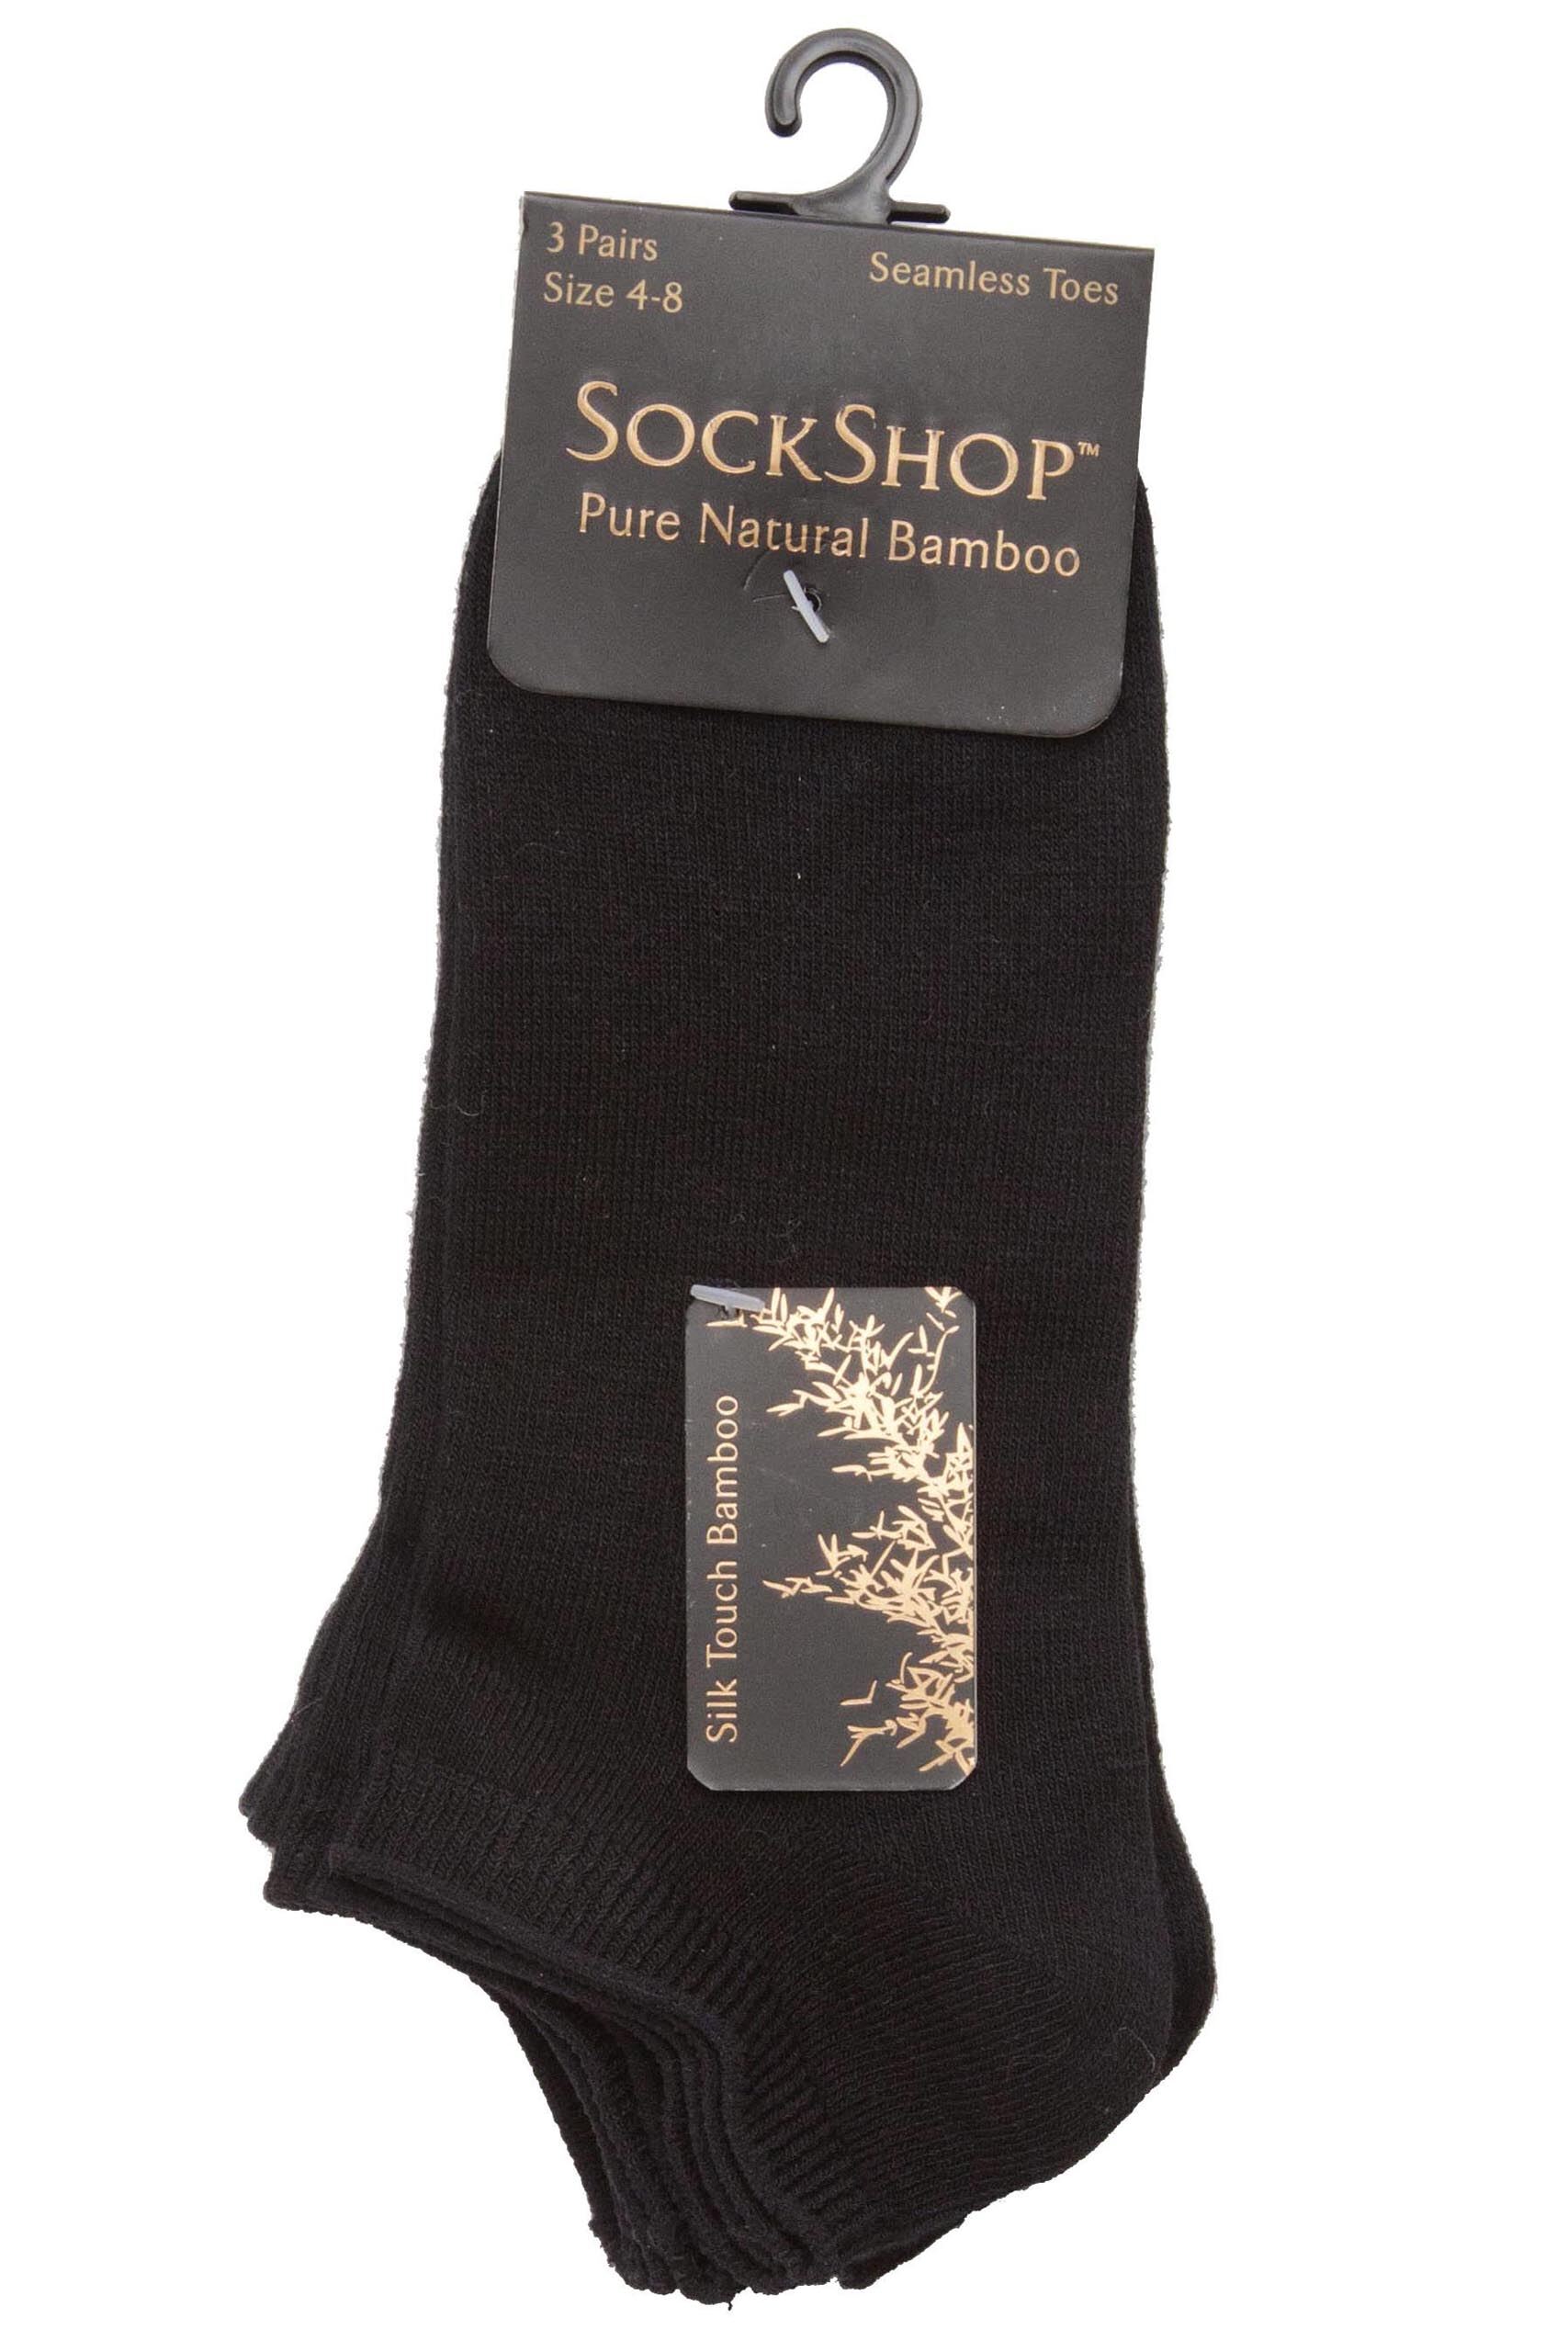 Ladies SockShop Bamboo Trainer Socks